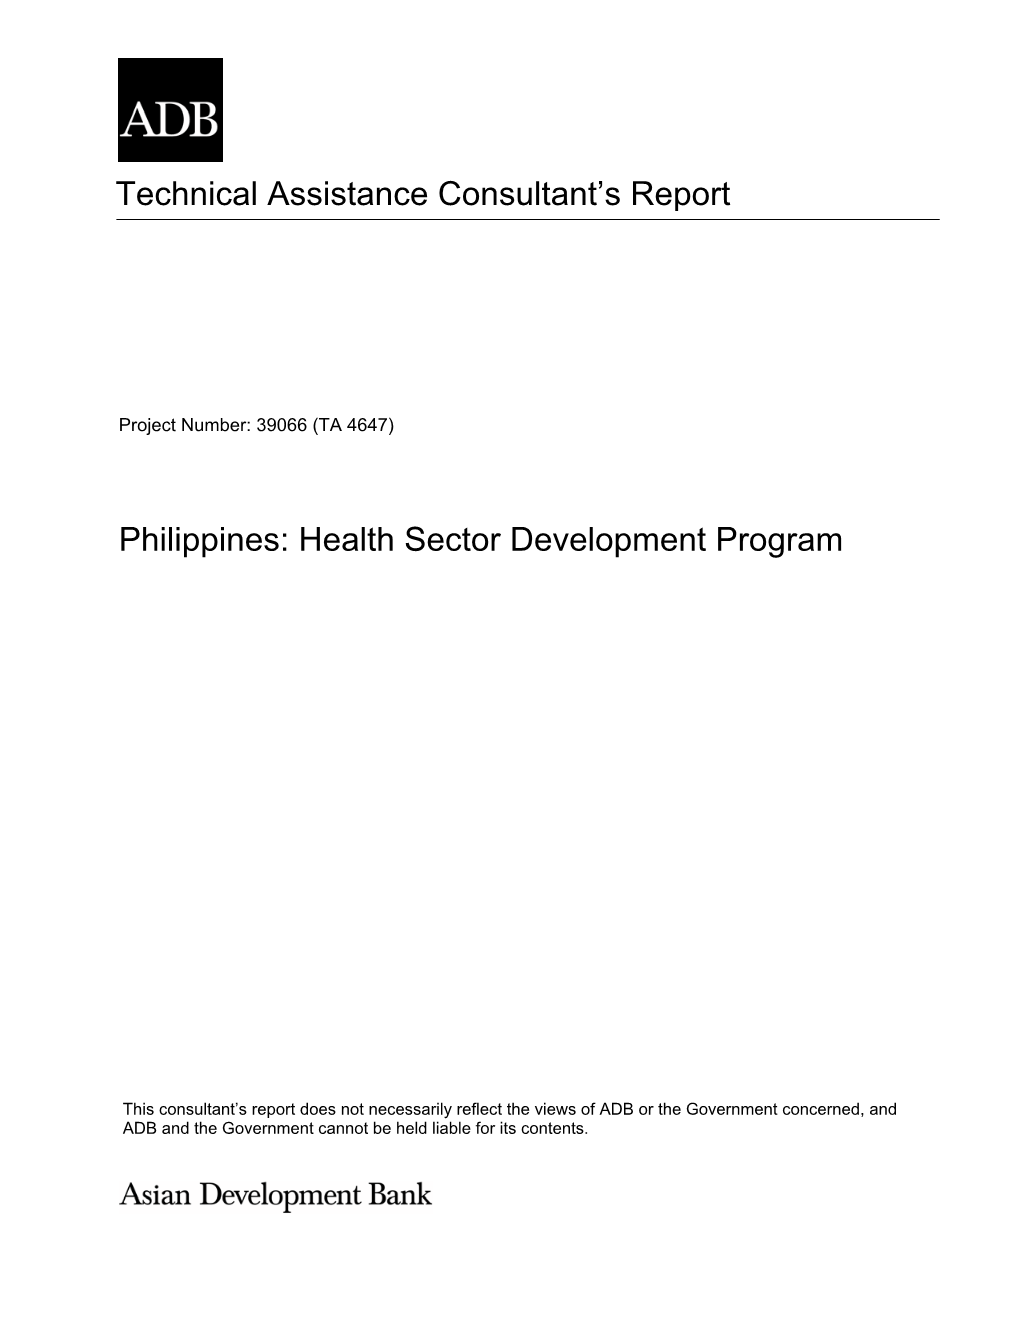 Health Sector Development Program